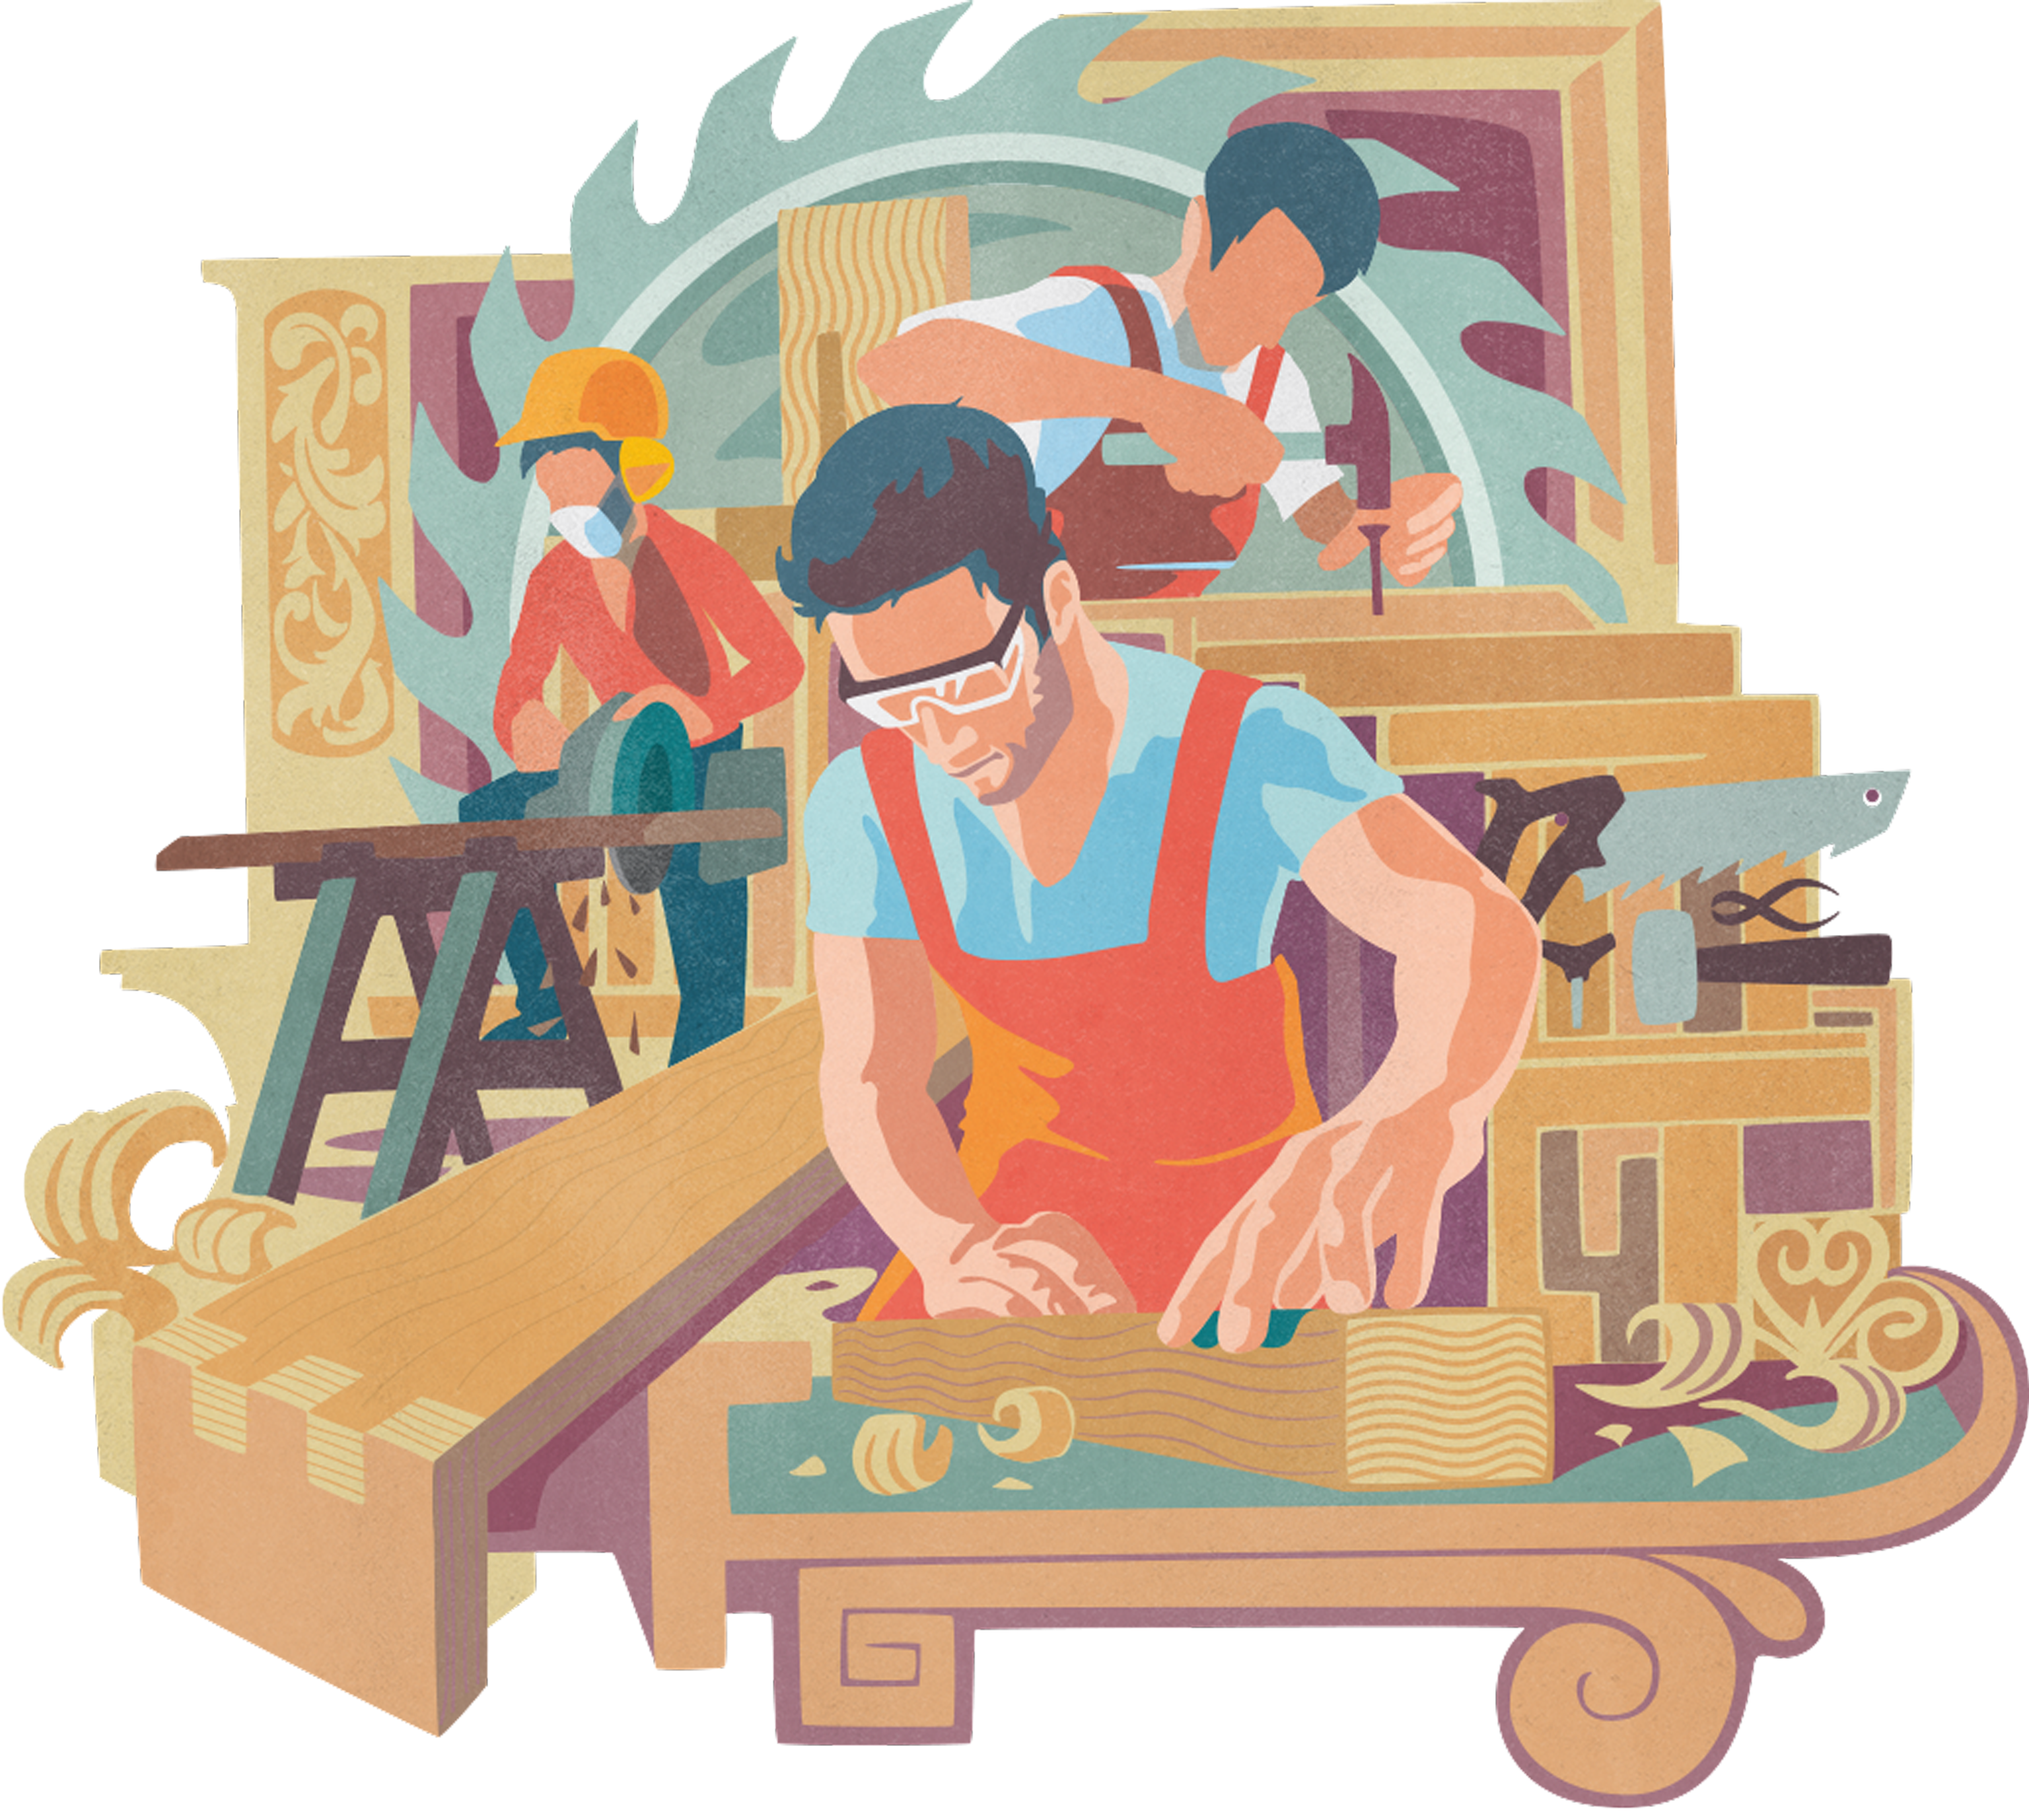 Timer Market carpentry illustration by Function & Form